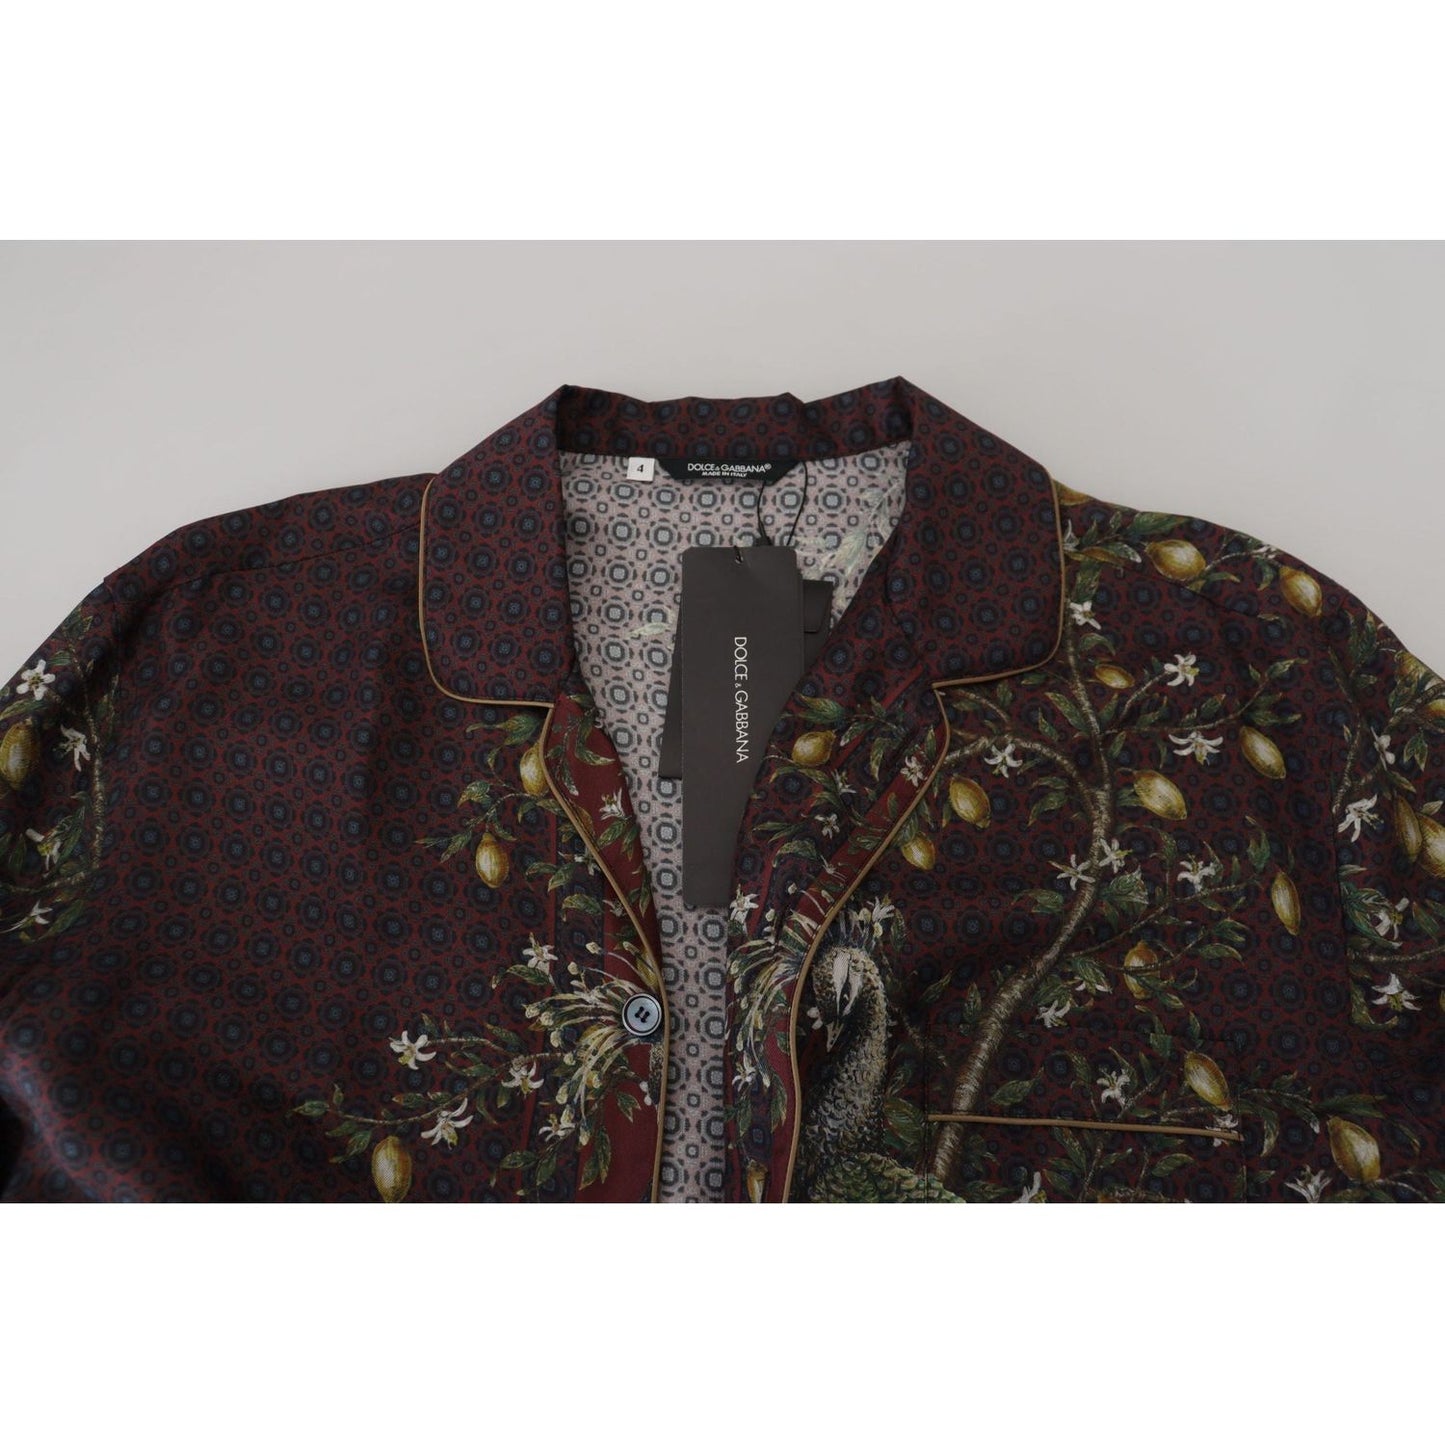 Dolce & Gabbana Elegant Silk Satin Men's Pajama Style Shirt bordeaux-ostrich-silk-satin-casual-mens-shirt IMG_2141-scaled-e526ca49-760.jpg